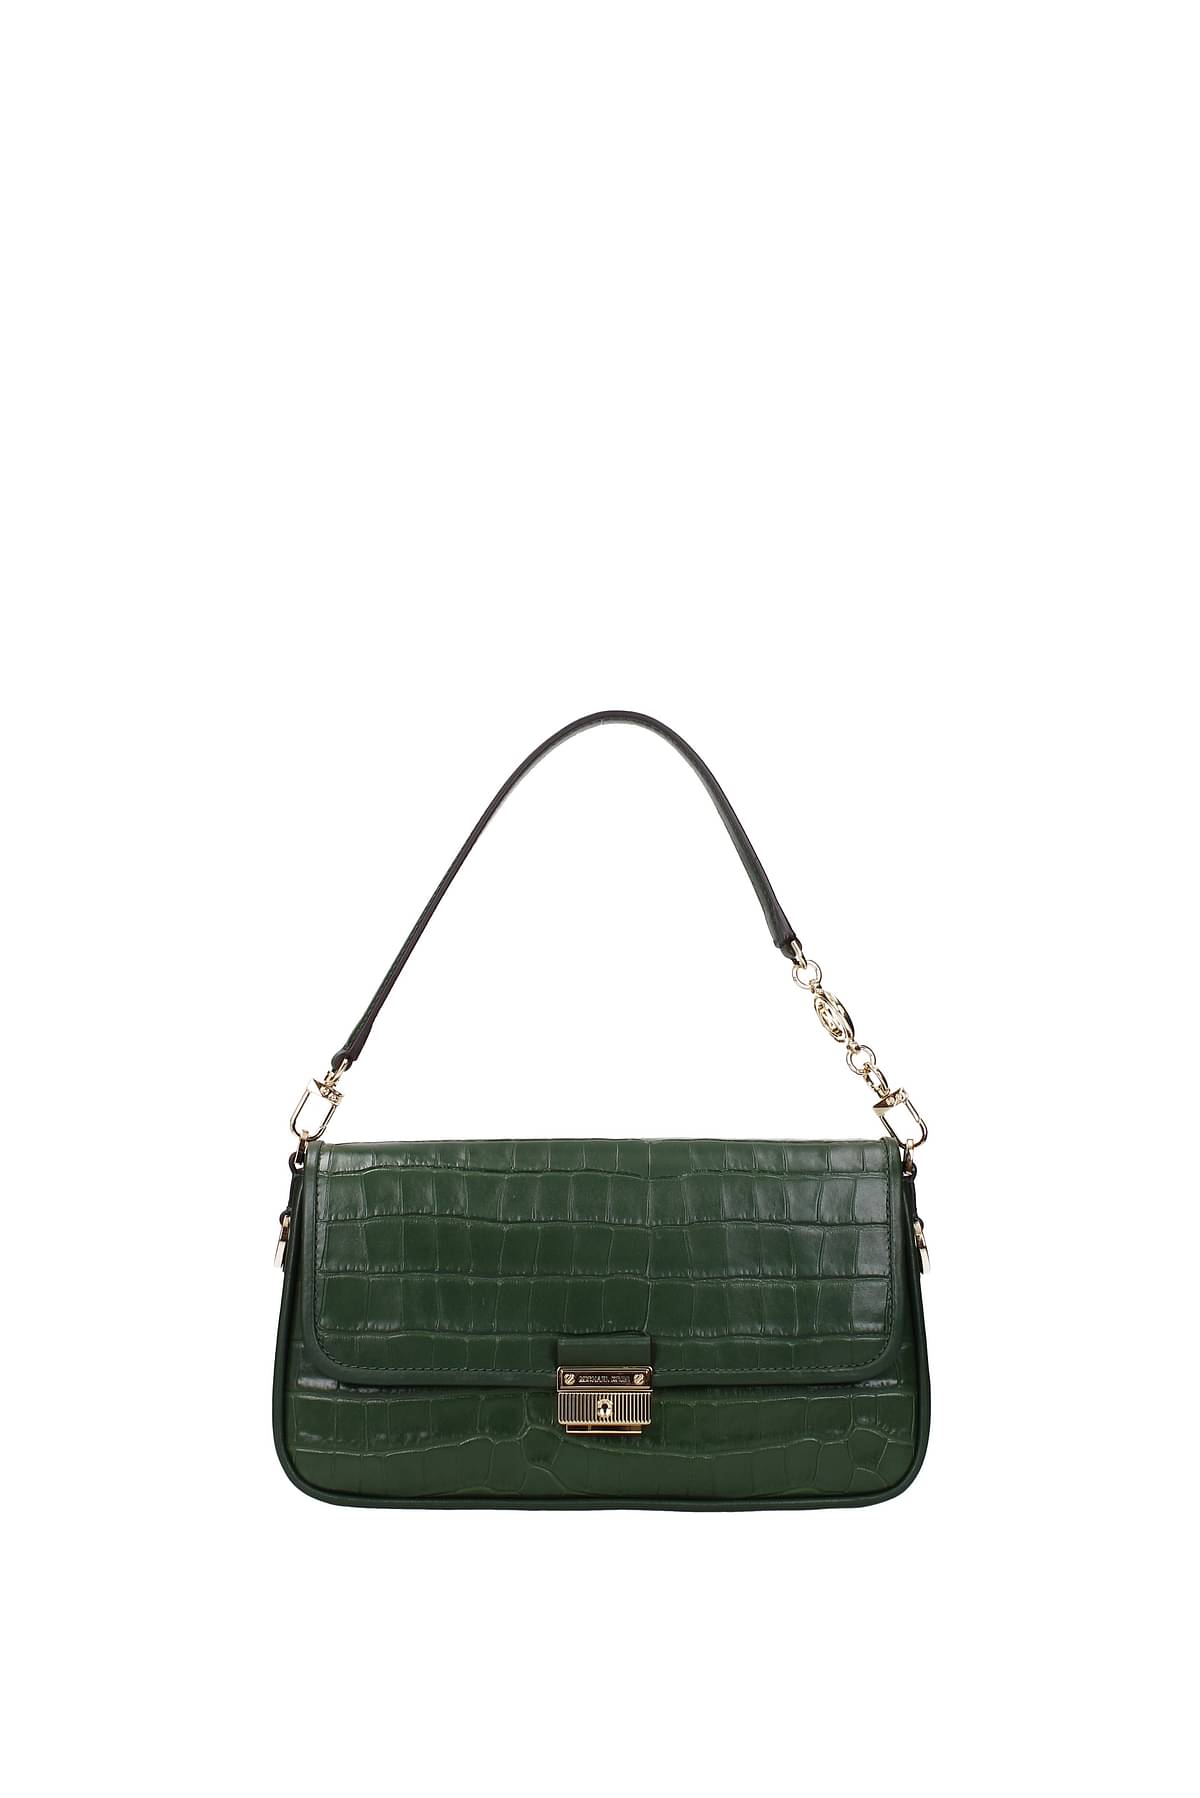 Michael Kors Handbags bradshaw sm Women 30F1G2BL1EMOSS Leather 159,25€